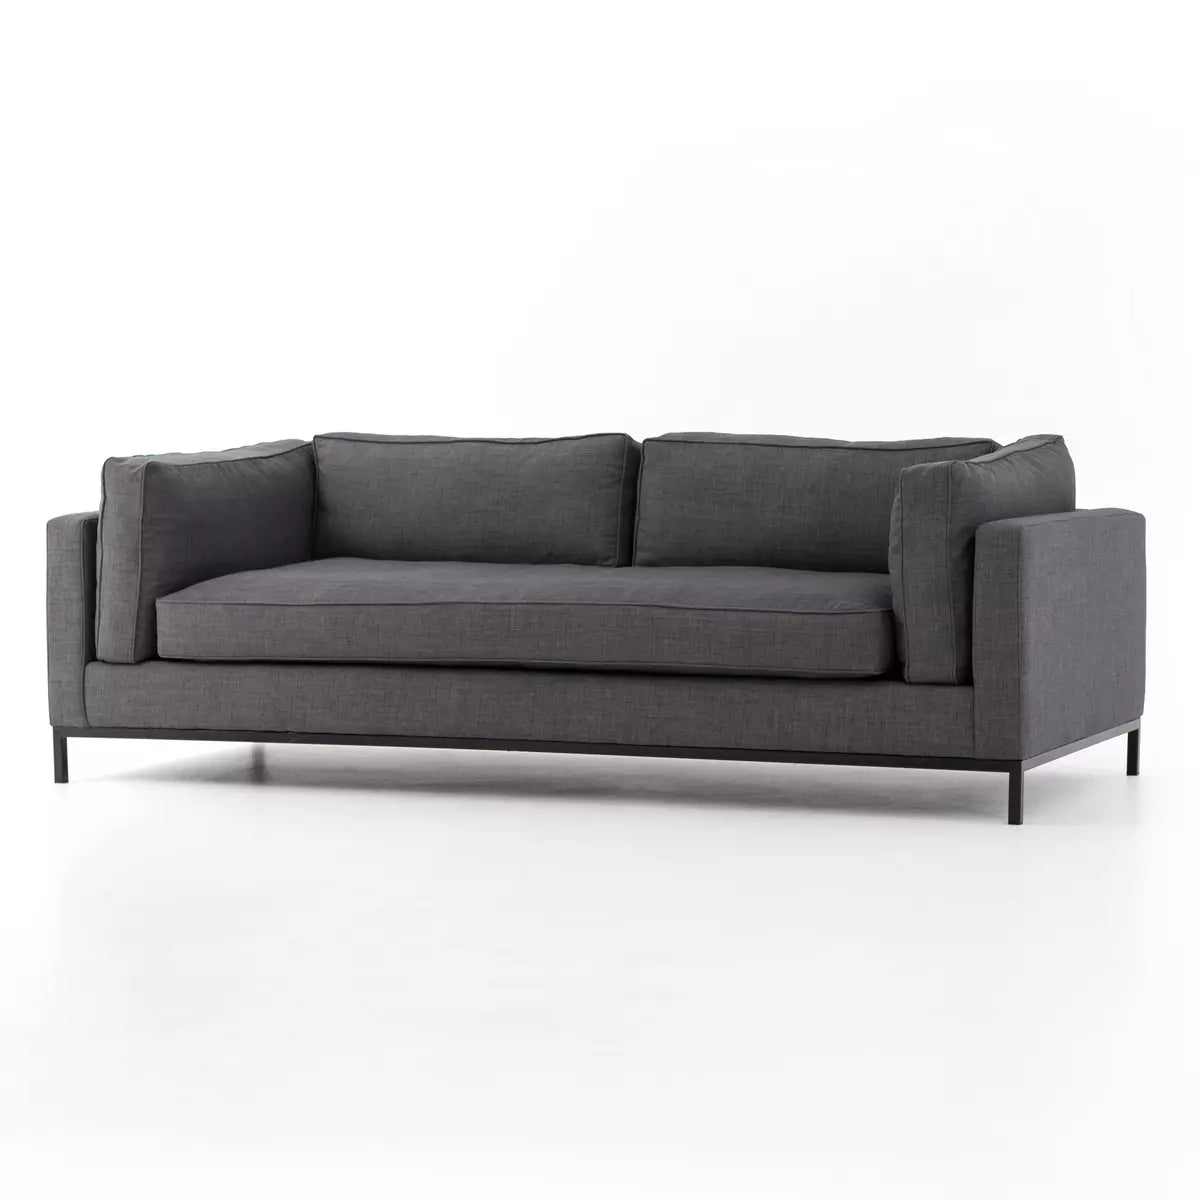 Franklin sofa